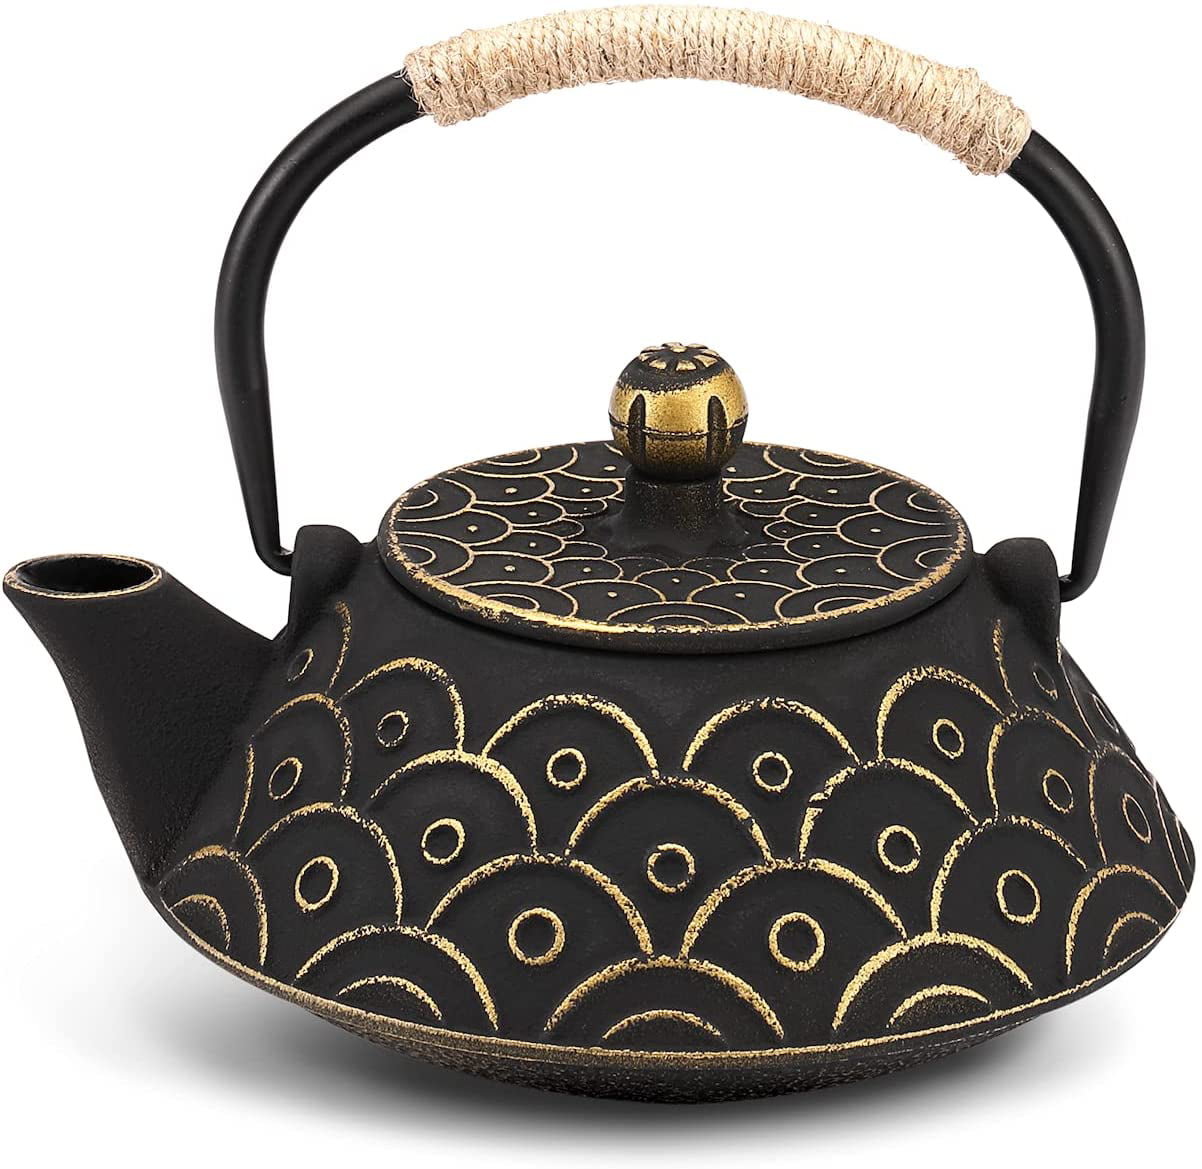 Ceramic Tea Kettles Japanese Styles Black Pottery Teapots Drinkware Supplies New 